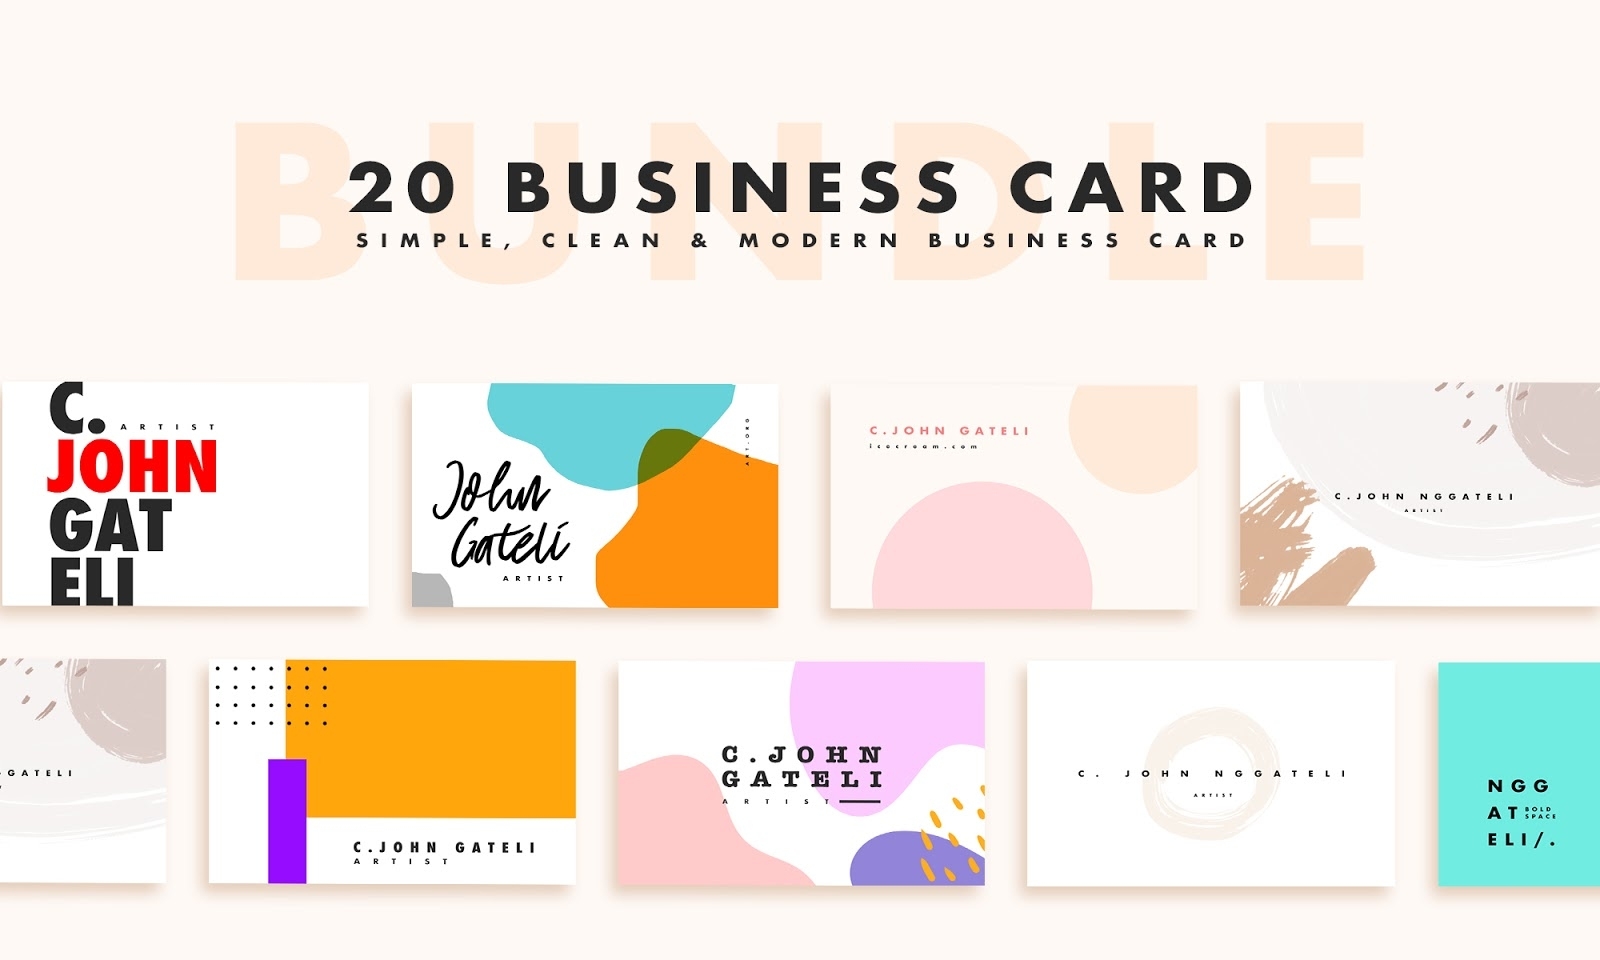 20 Simple Business Card Photoshop Template – Psd File Pertaining To Business Card Size Photoshop Template